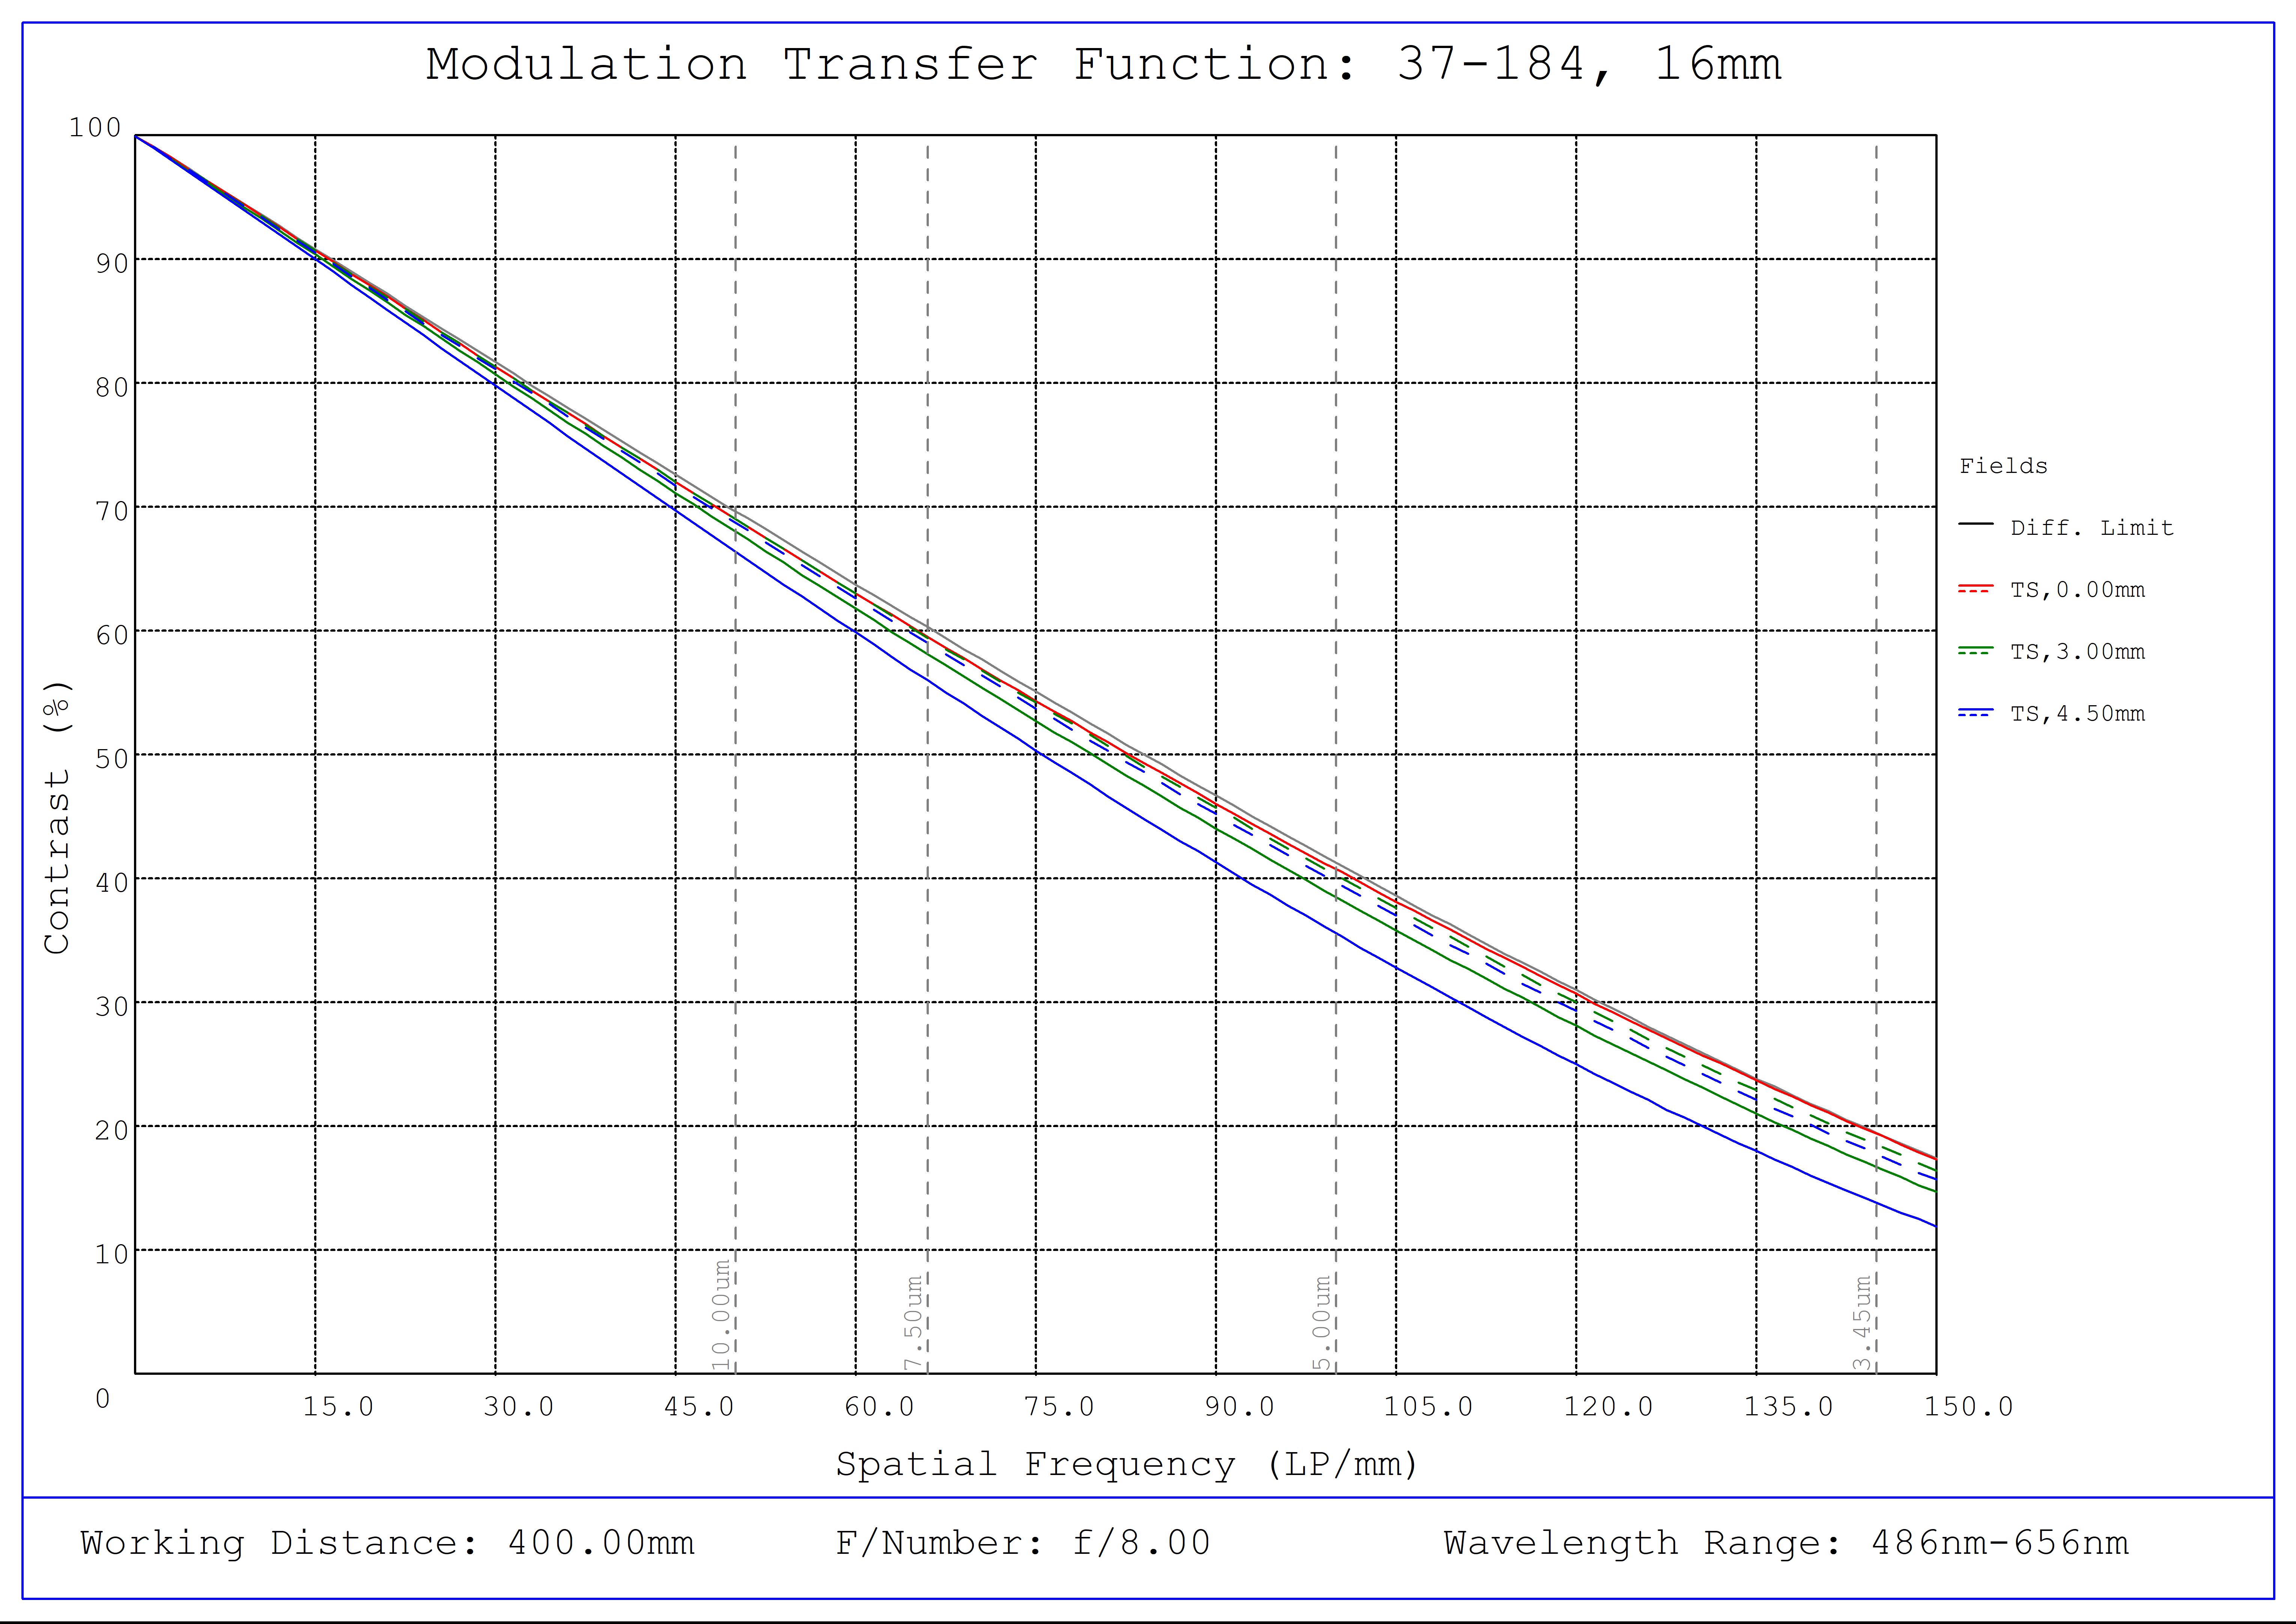 #37-184, 16mm FL f/8.0 Blue Series M12 Lens, Modulated Transfer Function (MTF) Plot, 400mm Working Distance, f8